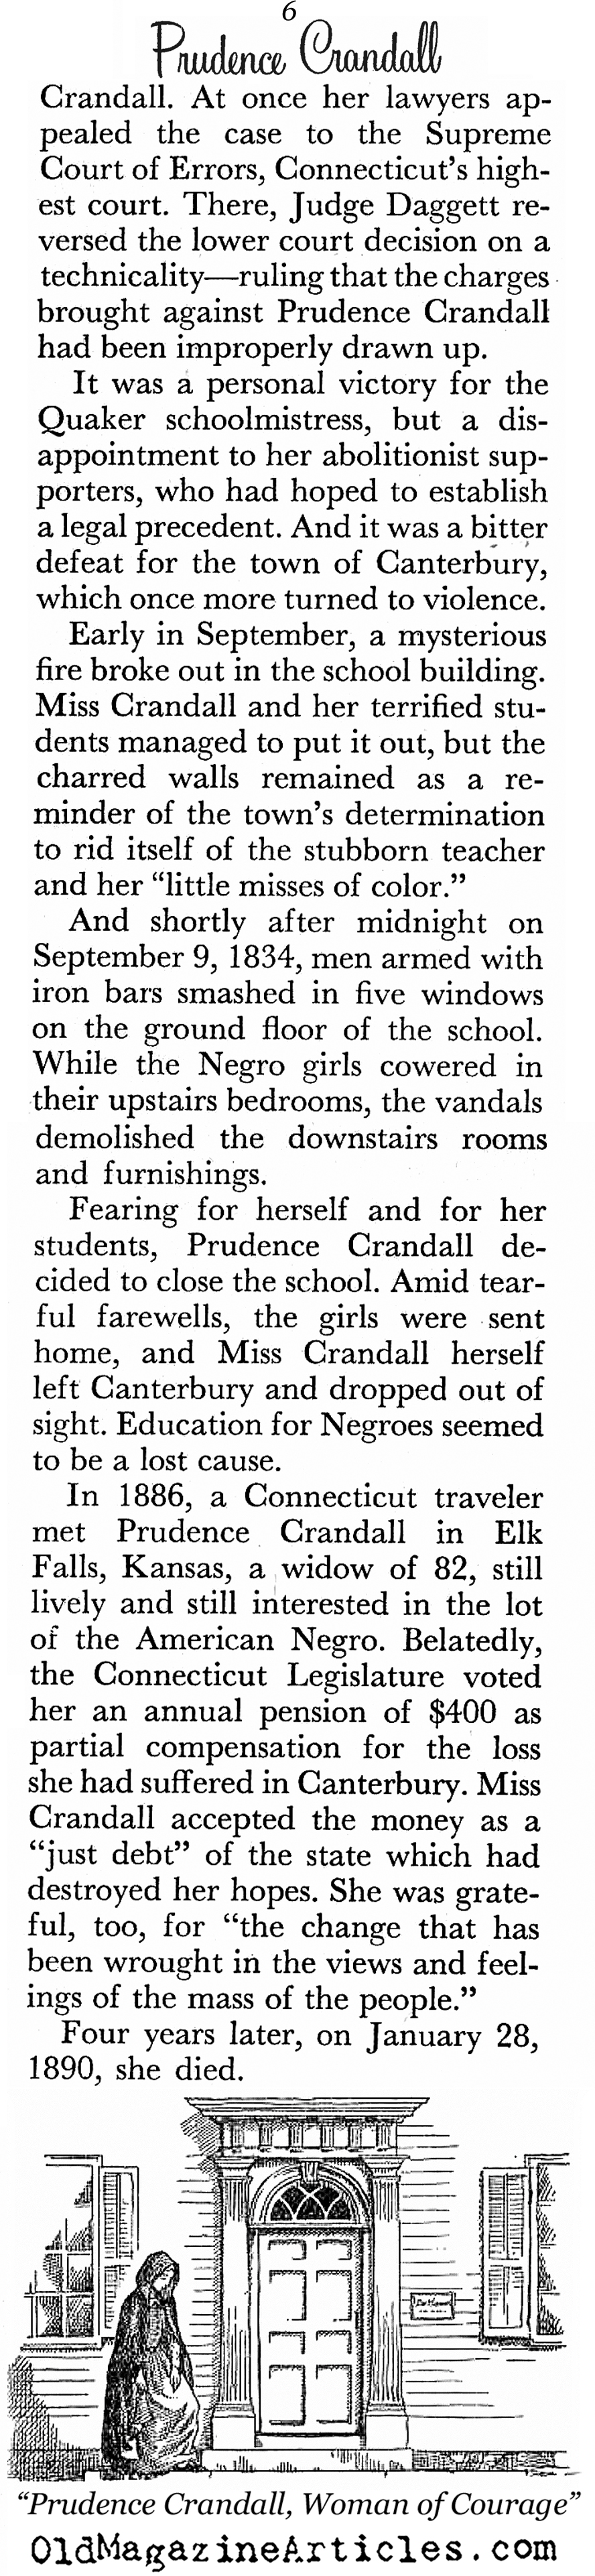 Admirable Prudence Crandall (Coronet Magazine, 1961) 